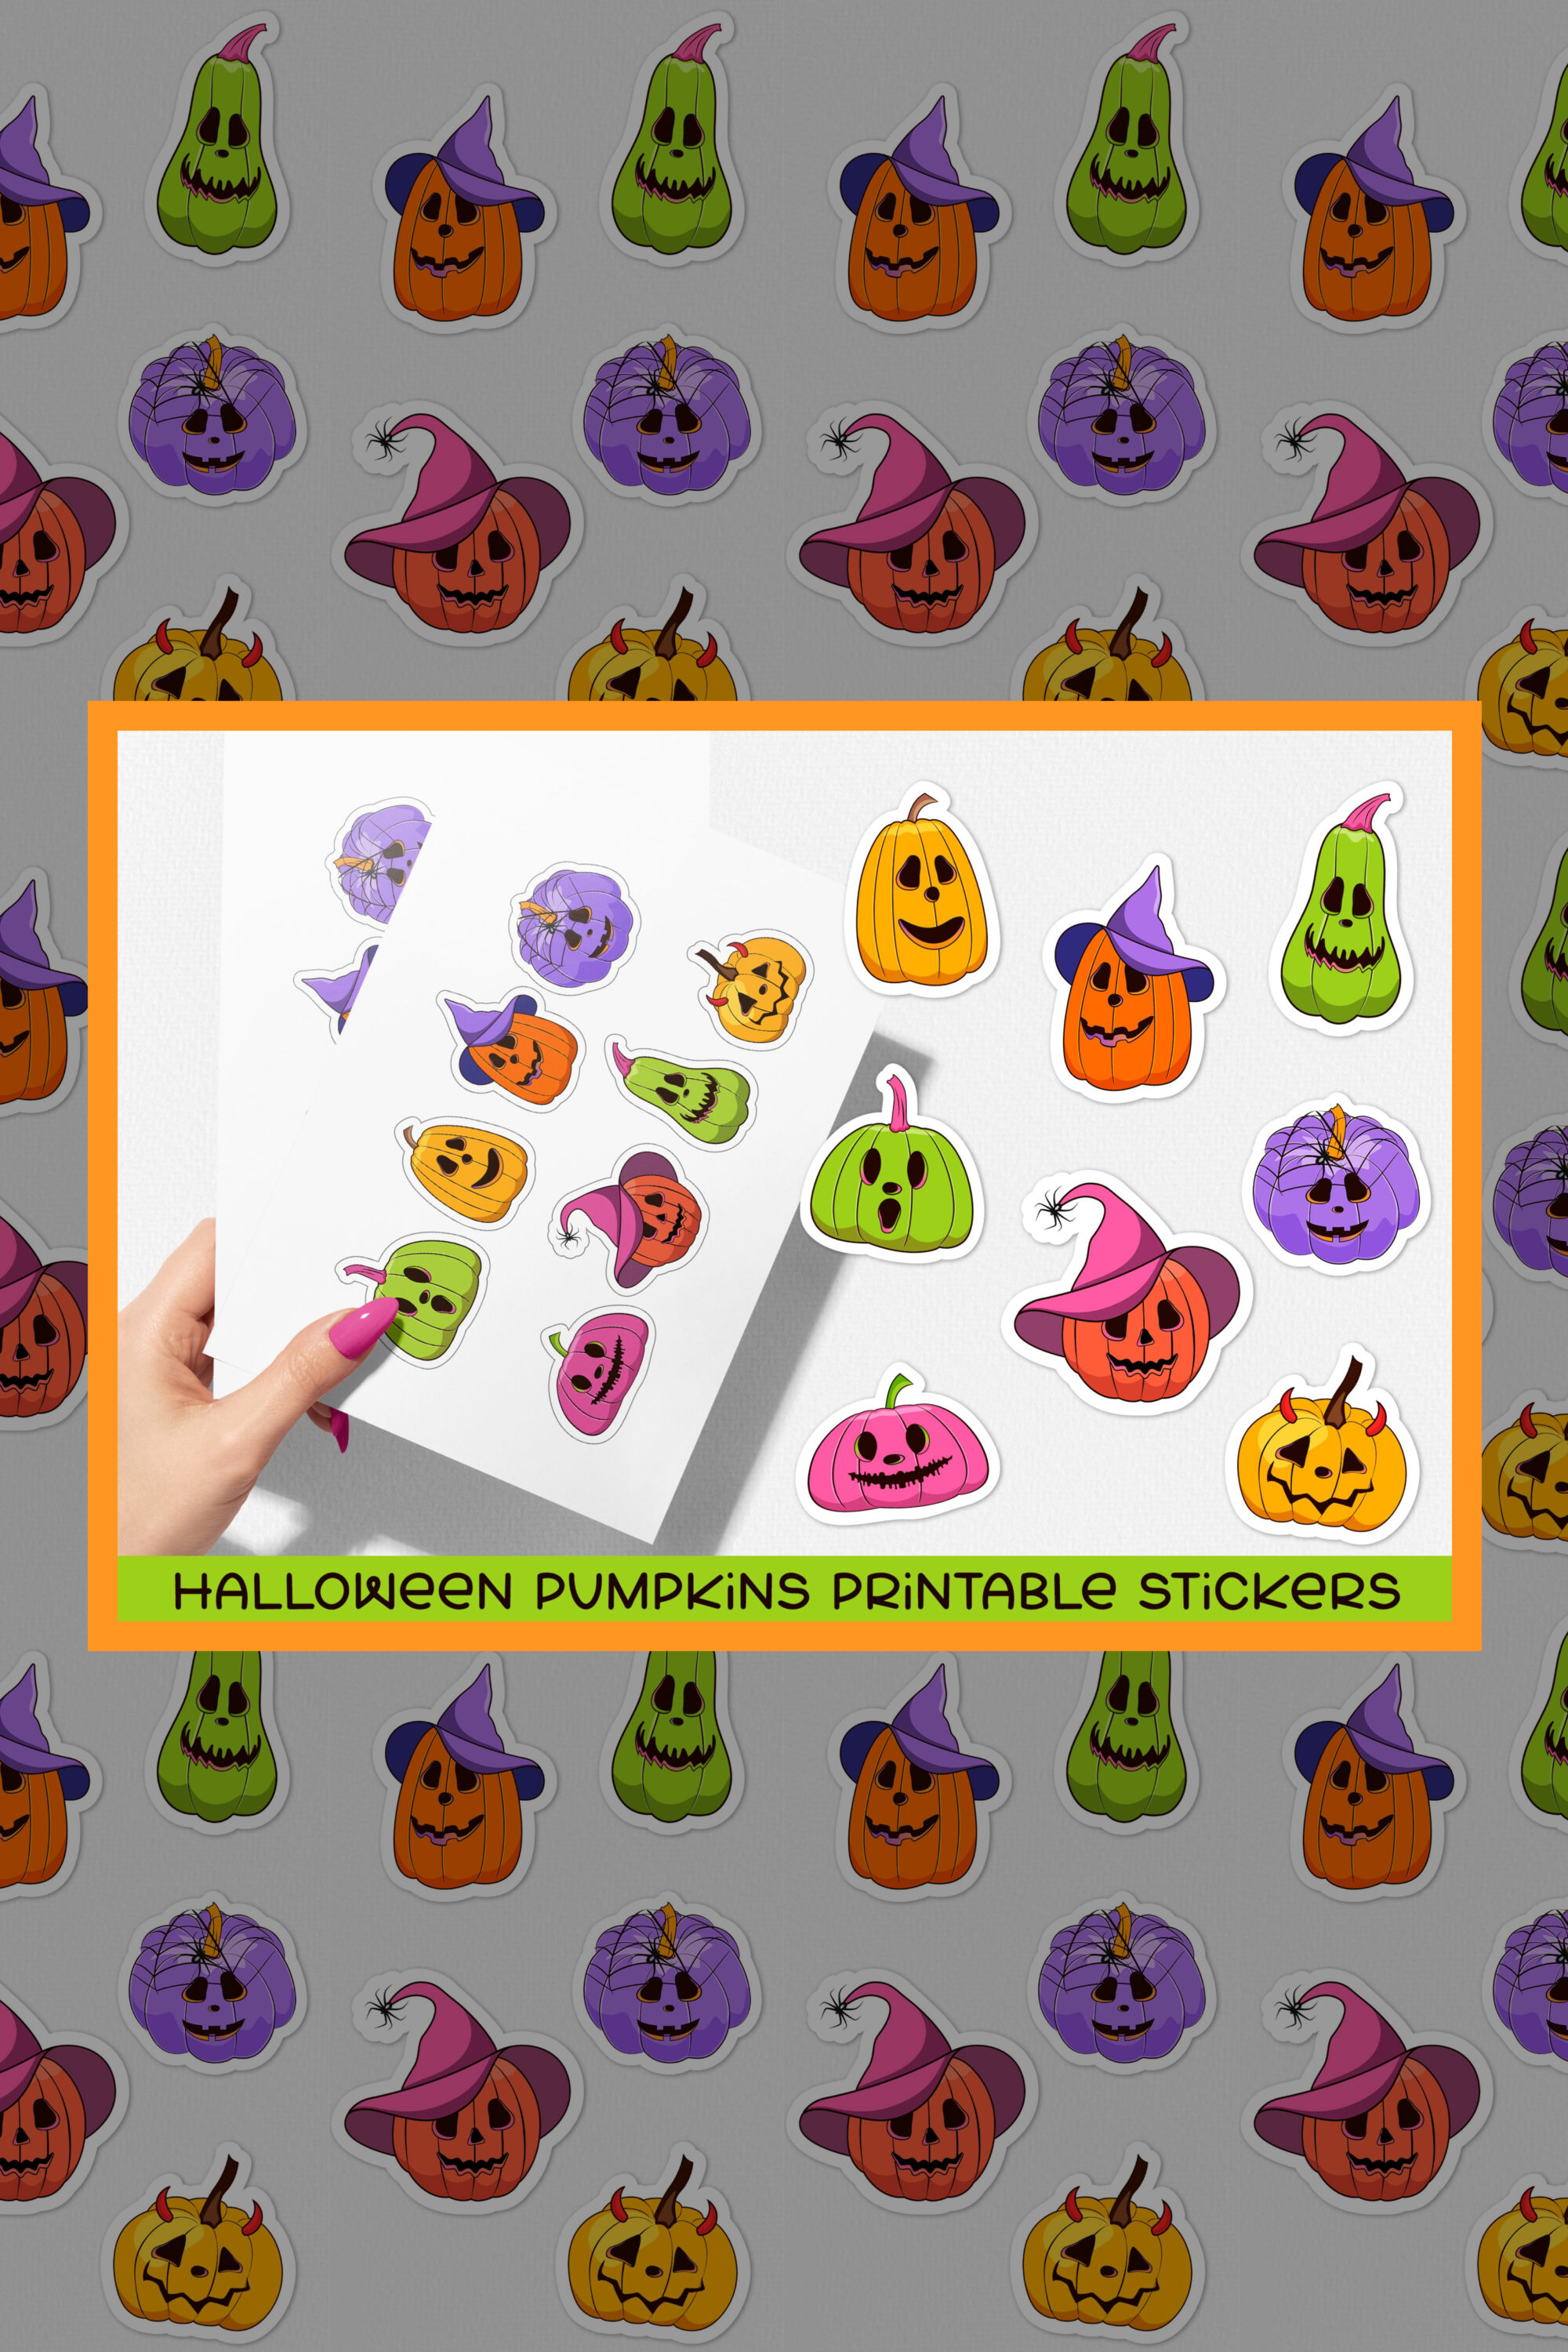 Halloween pumpkins printable stickers of pinterest.